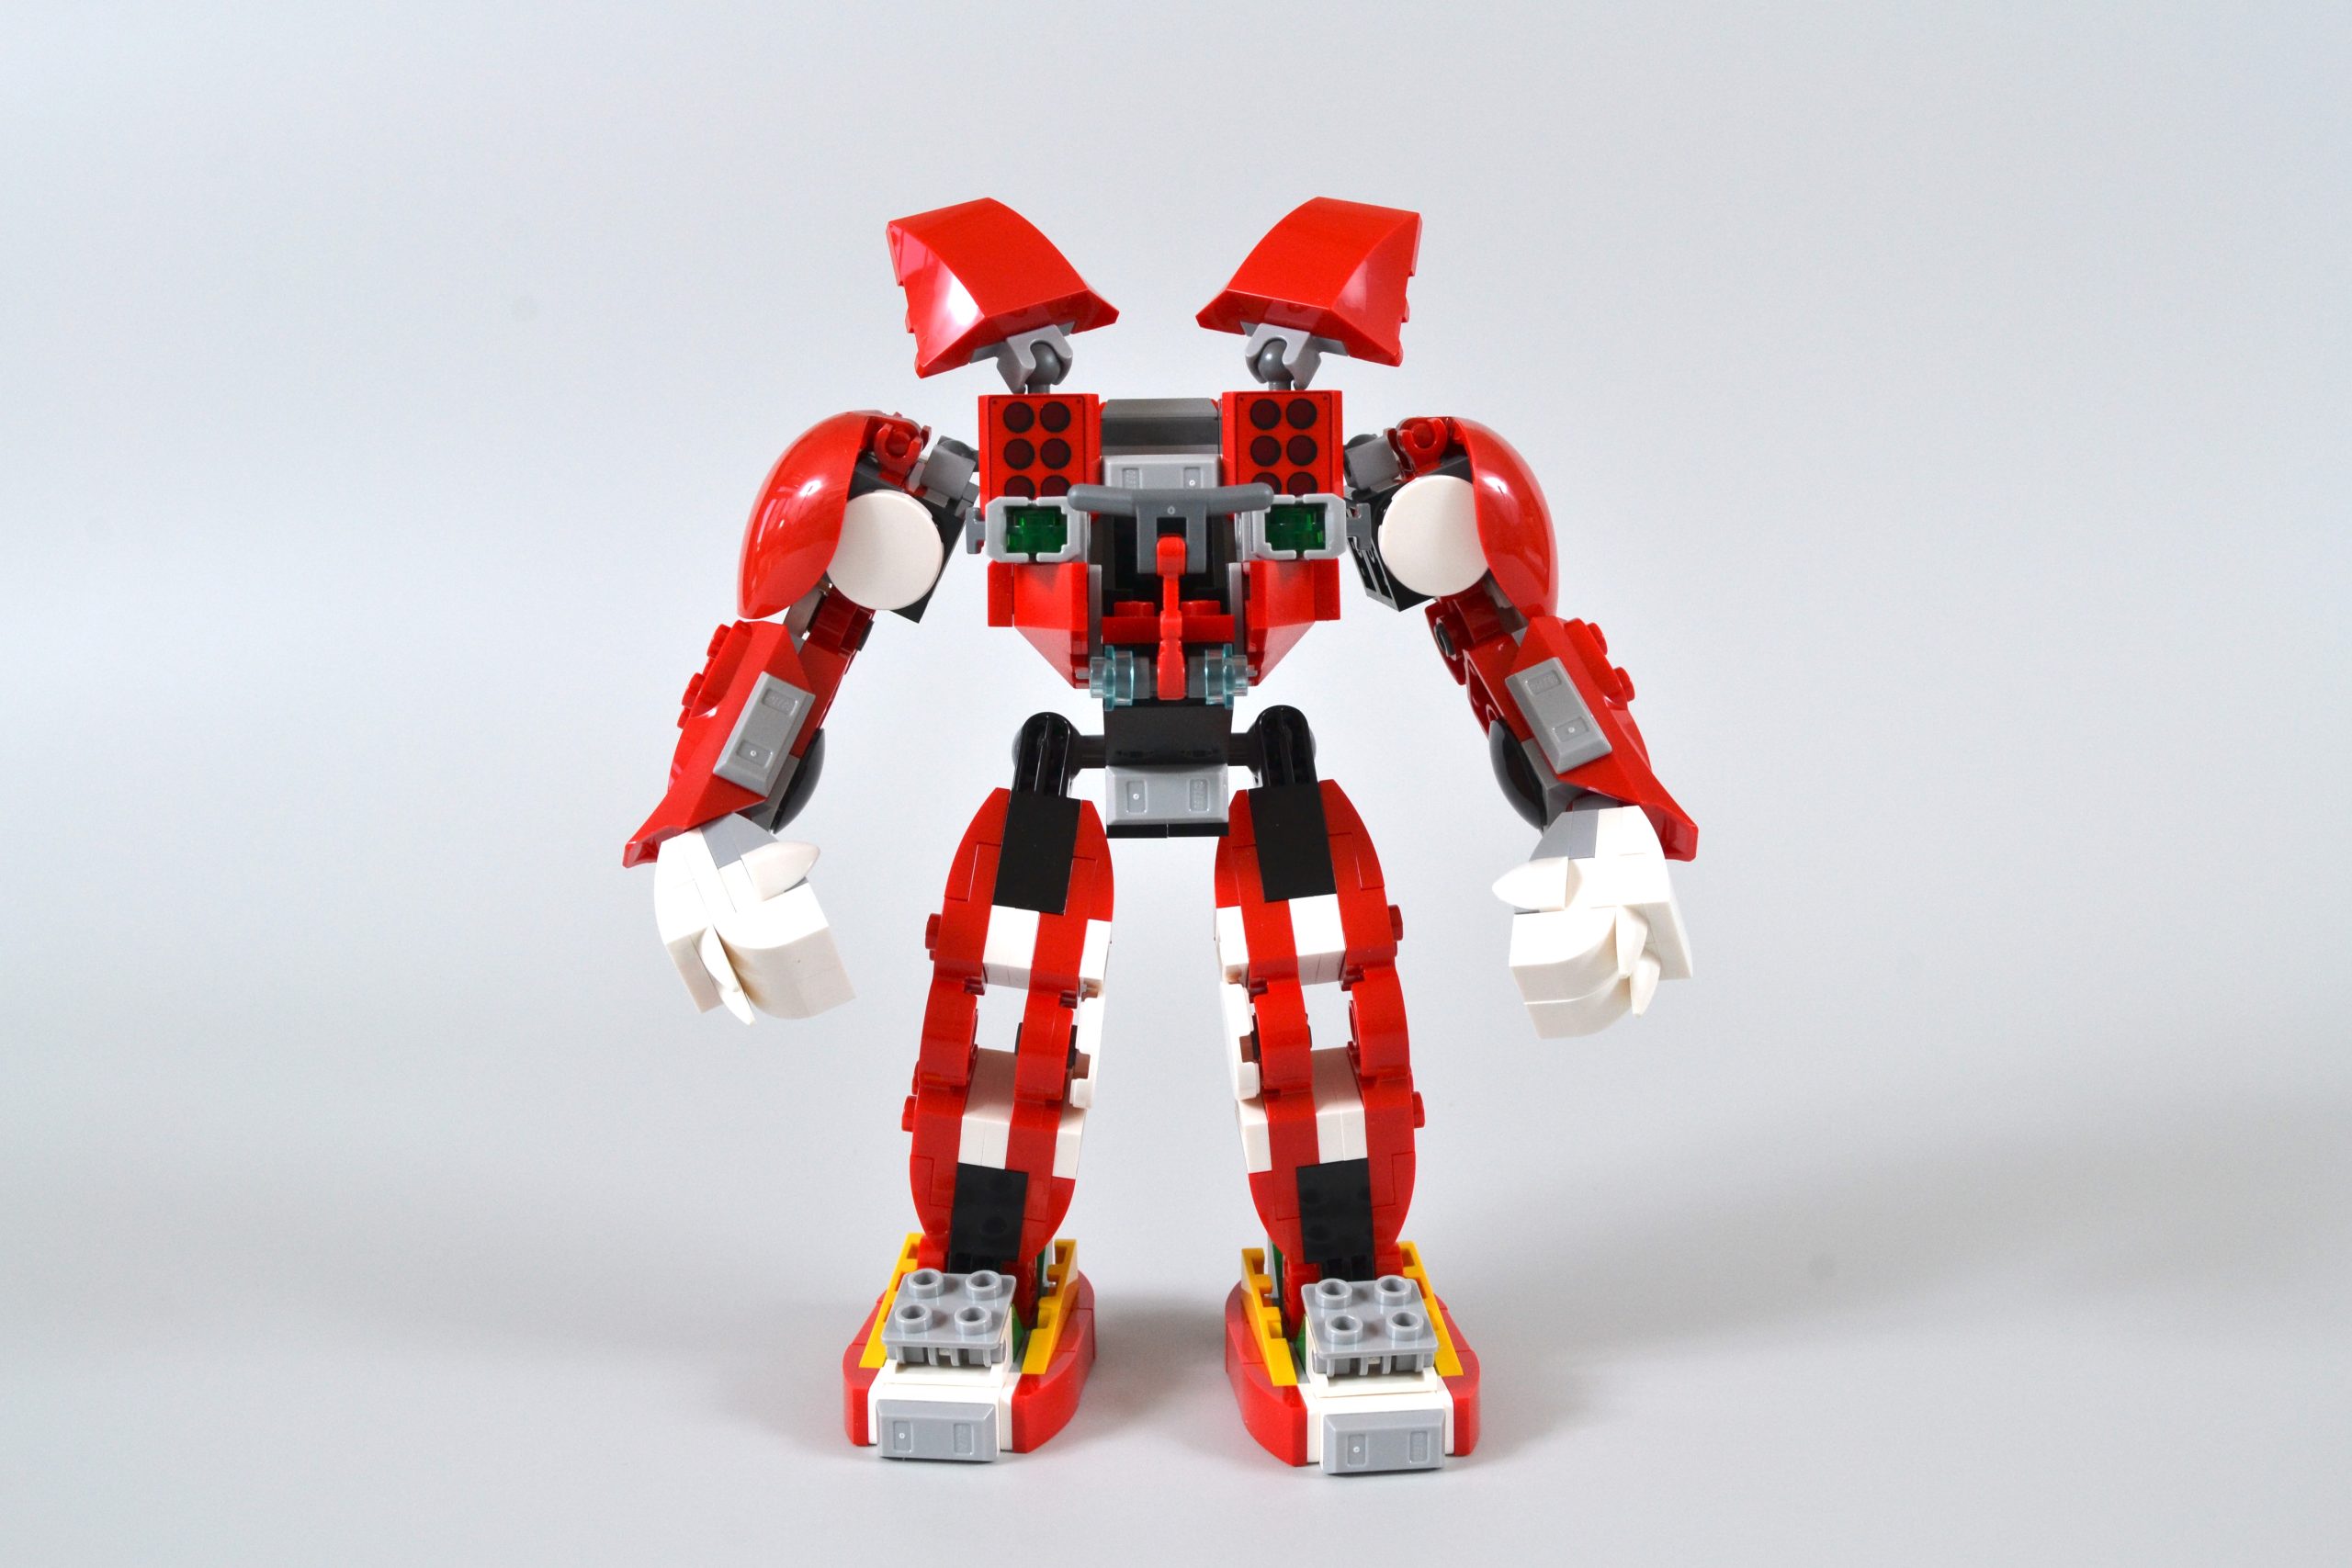 LEGO Sonic Robot Guardián De Knuckles 76996